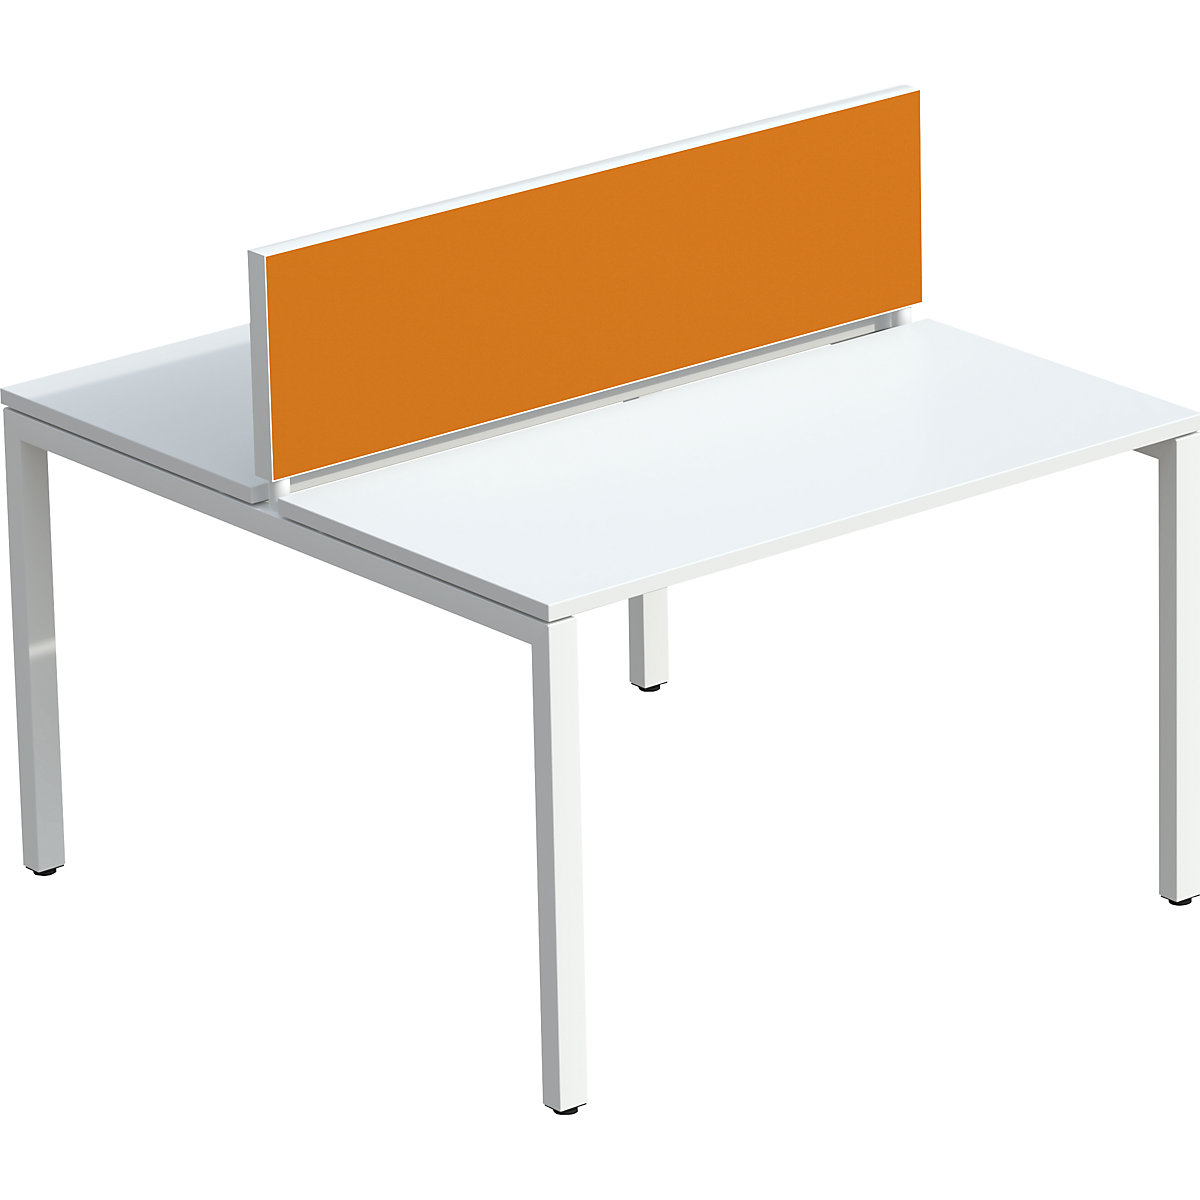 Table partition for team desks (Product illustration 14)-13